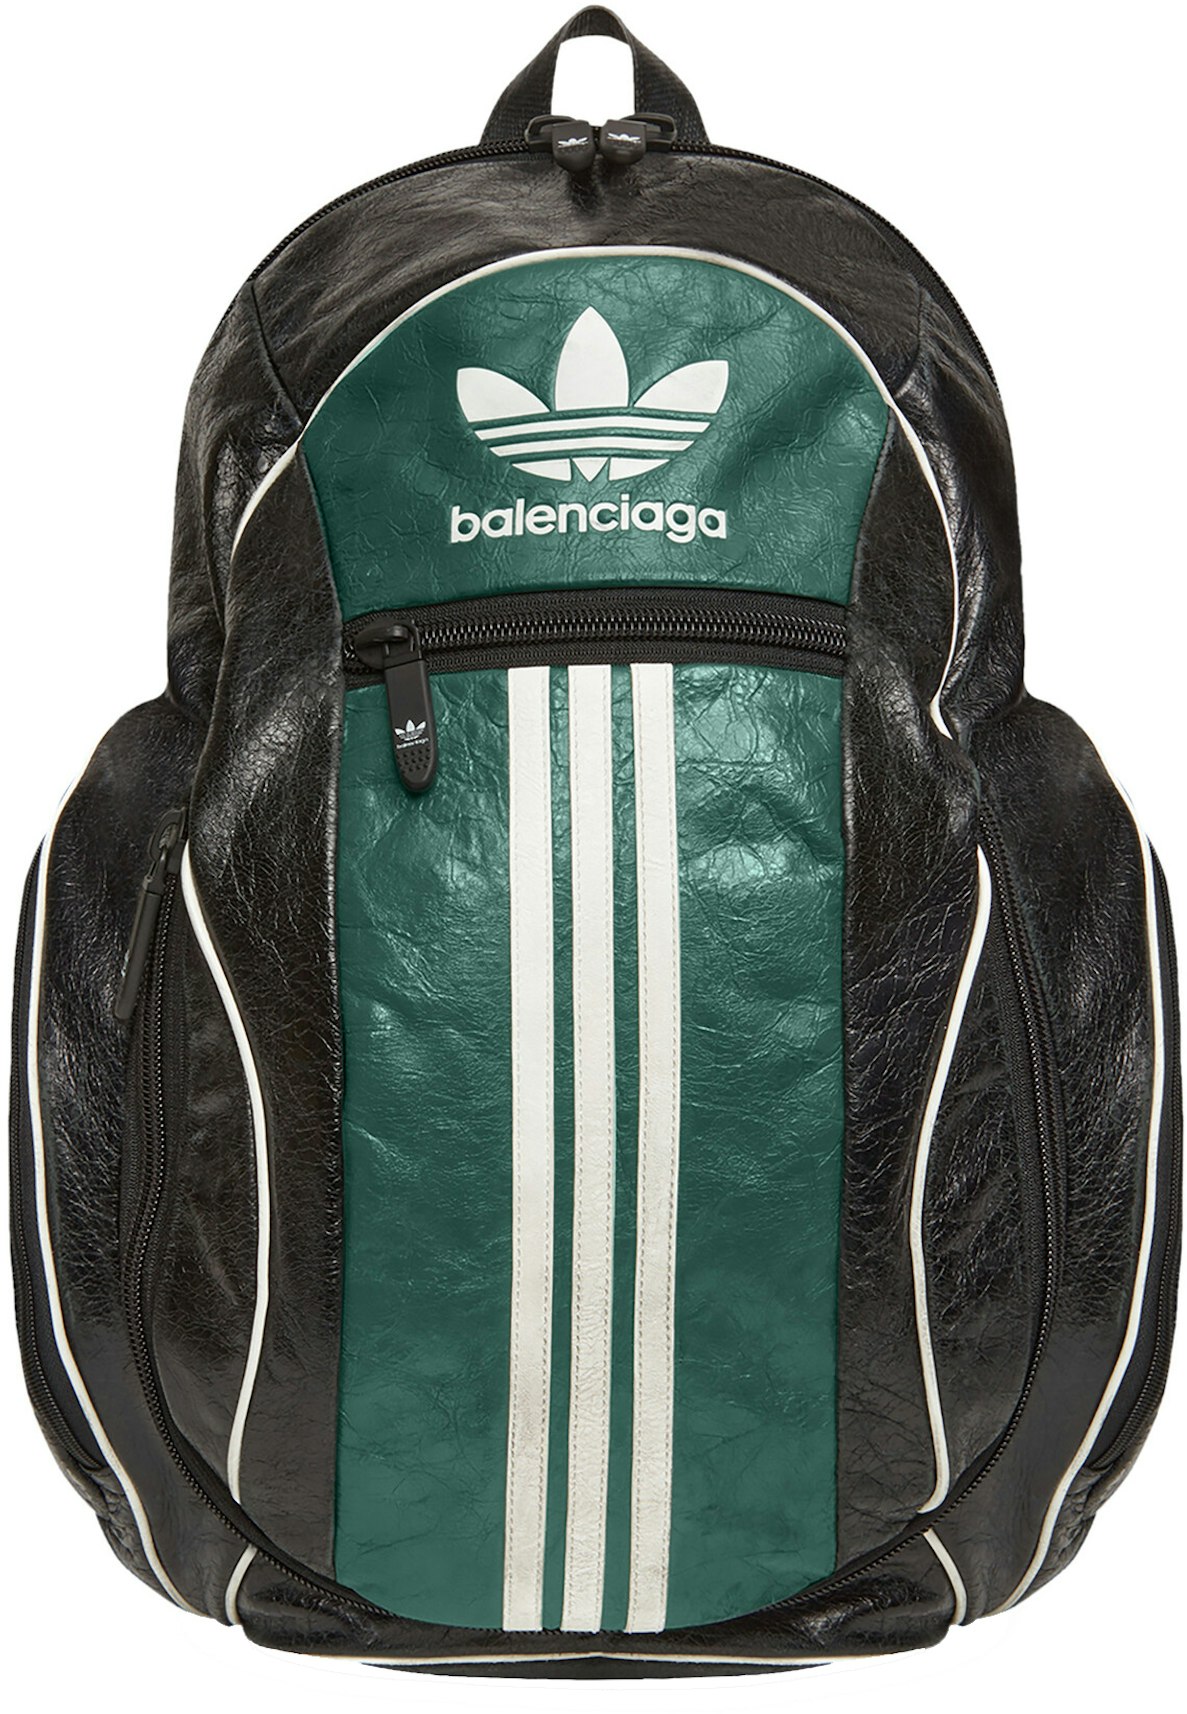 Balenciaga x adidas Large Backpack Aged Arena Leather US